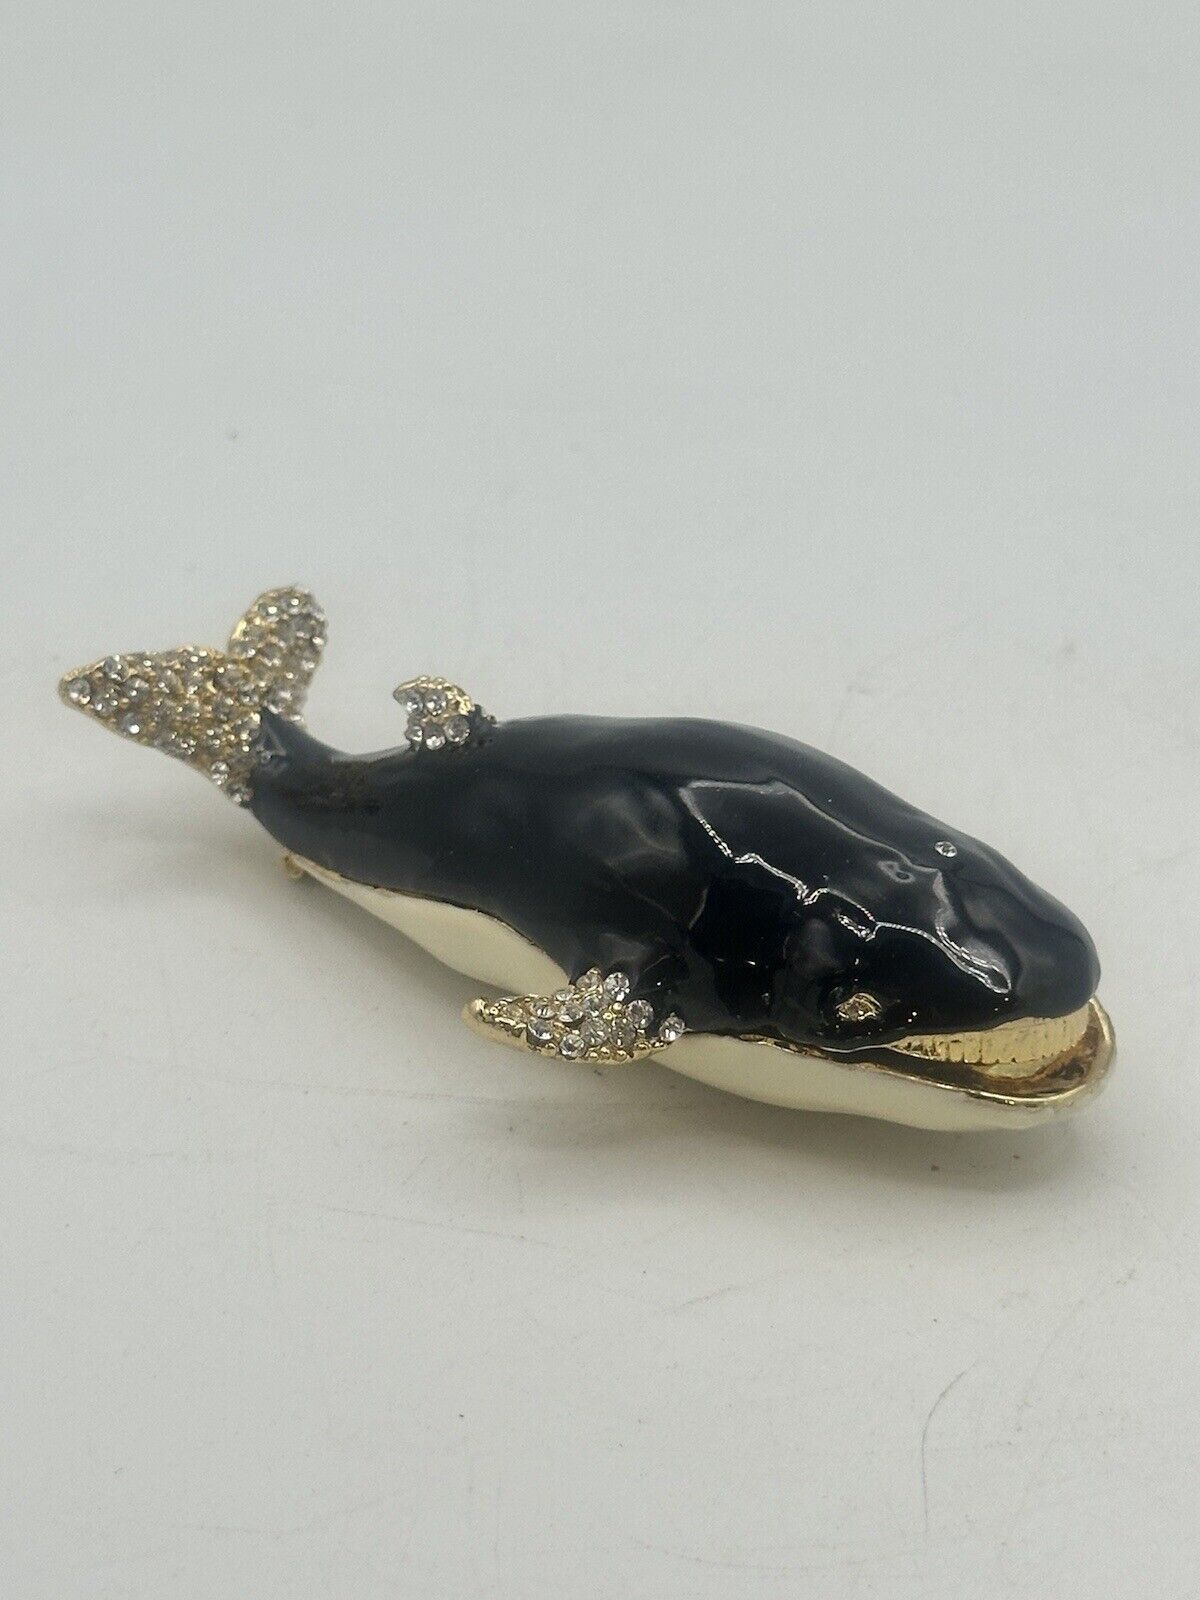 Whale Hinged Trinket Box Brass Enamel And Rhinestone Magnetic Closure Decorative